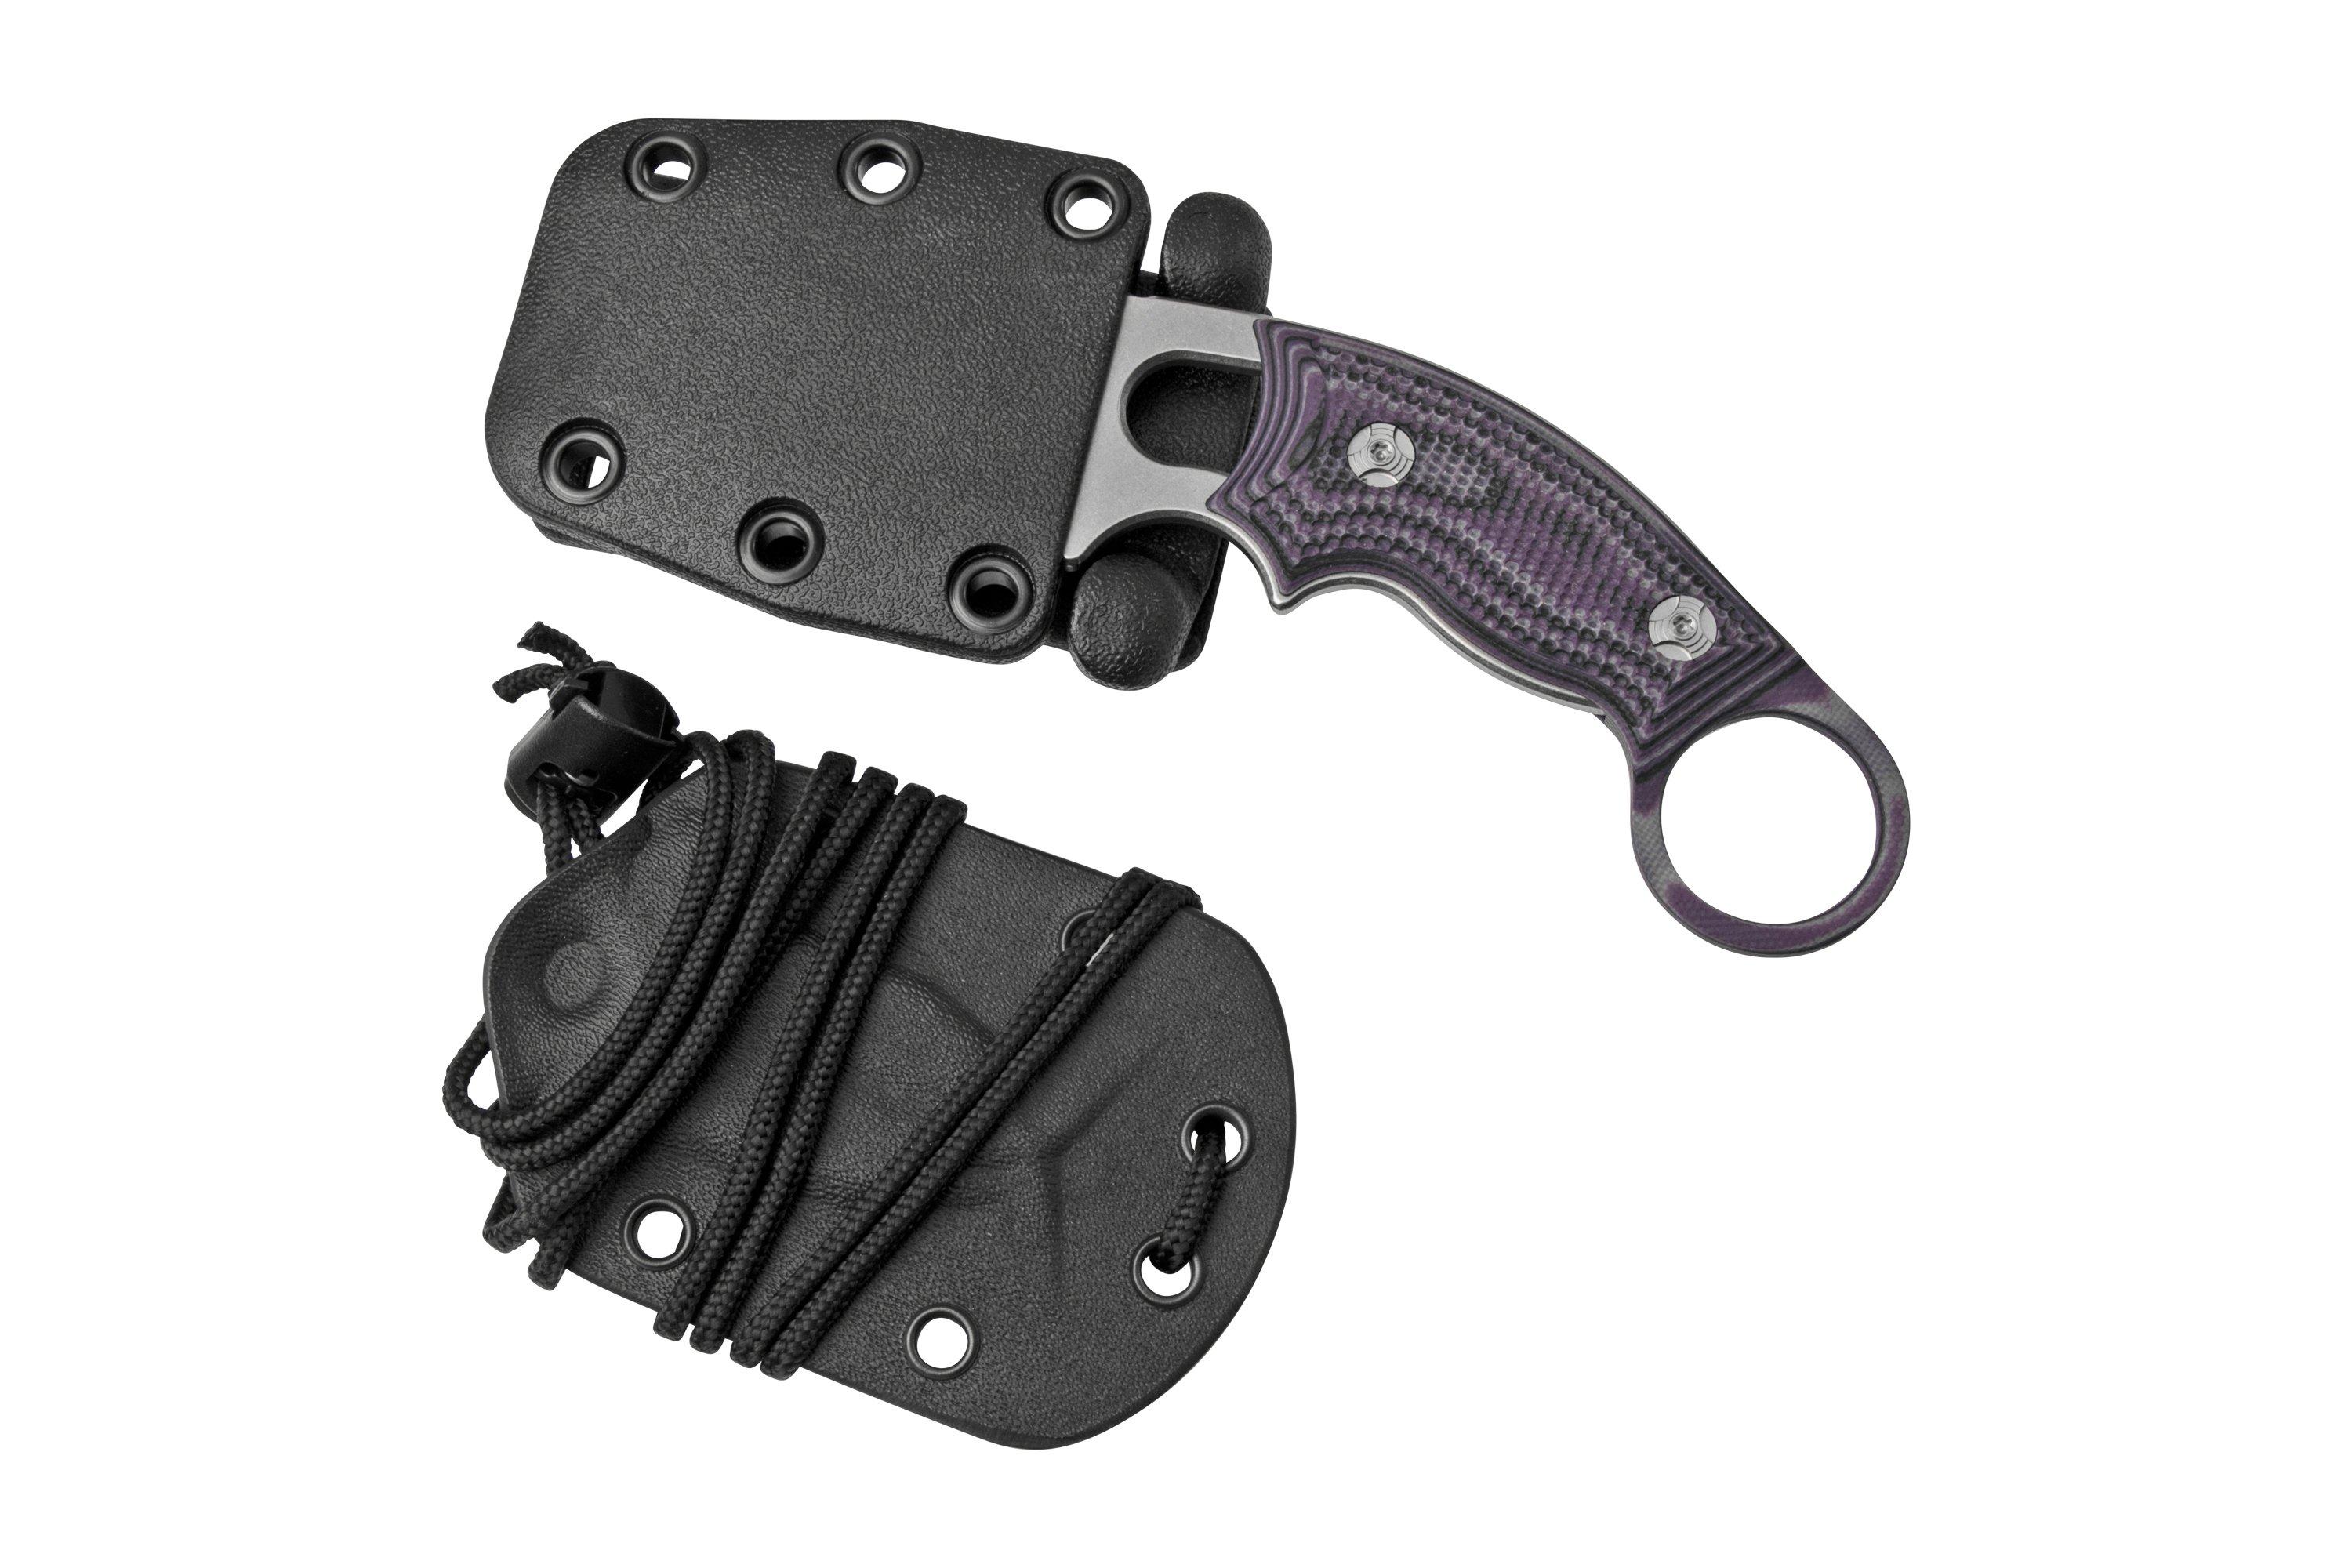 Hogue EX-F03 G-Mascus Purple, 35338 neck knife | Advantageously 